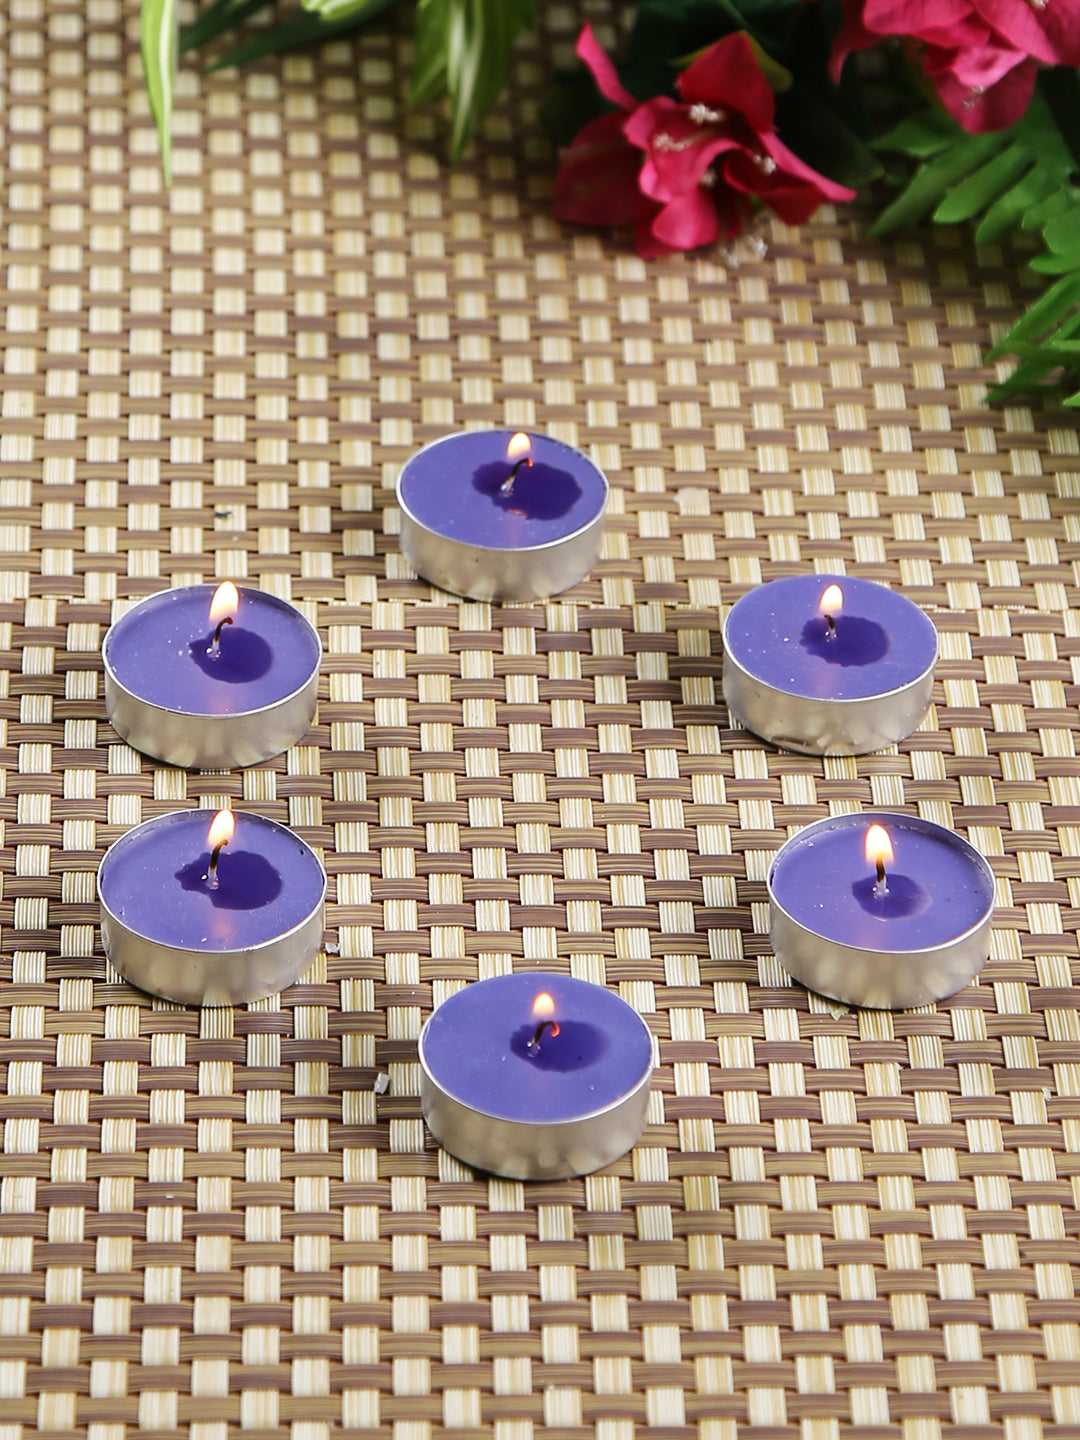 Hosley Highly Fragranced Lavender Tea Light Candles (Set of 30)